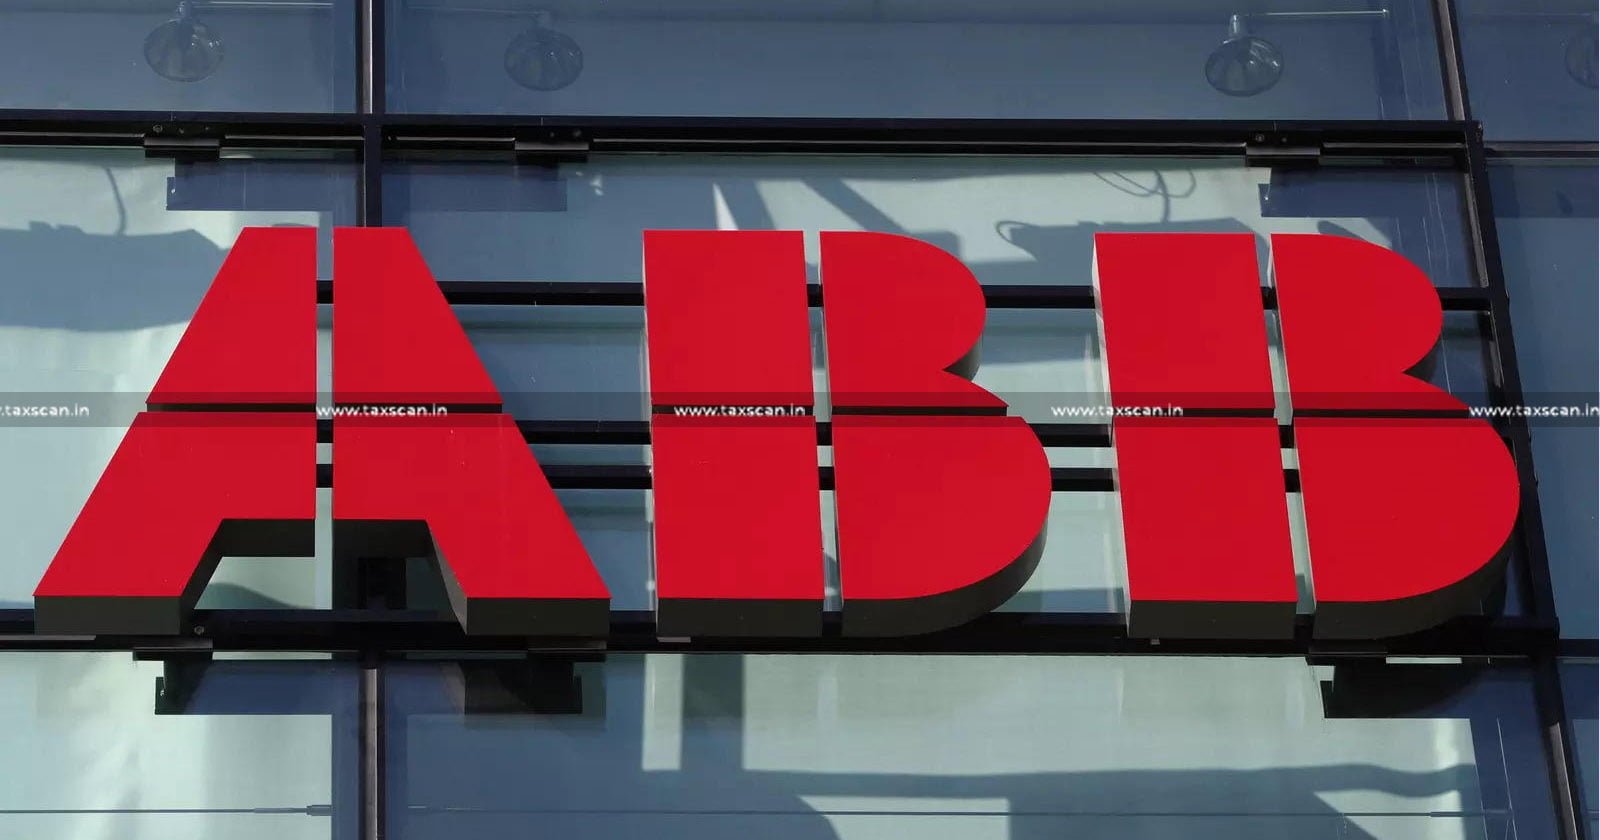 B.com vacancy in ABB - ABB Hiring - ABB Careers - Accounting Jobs In ABB - Finance Jobs At ABB - Taxscan